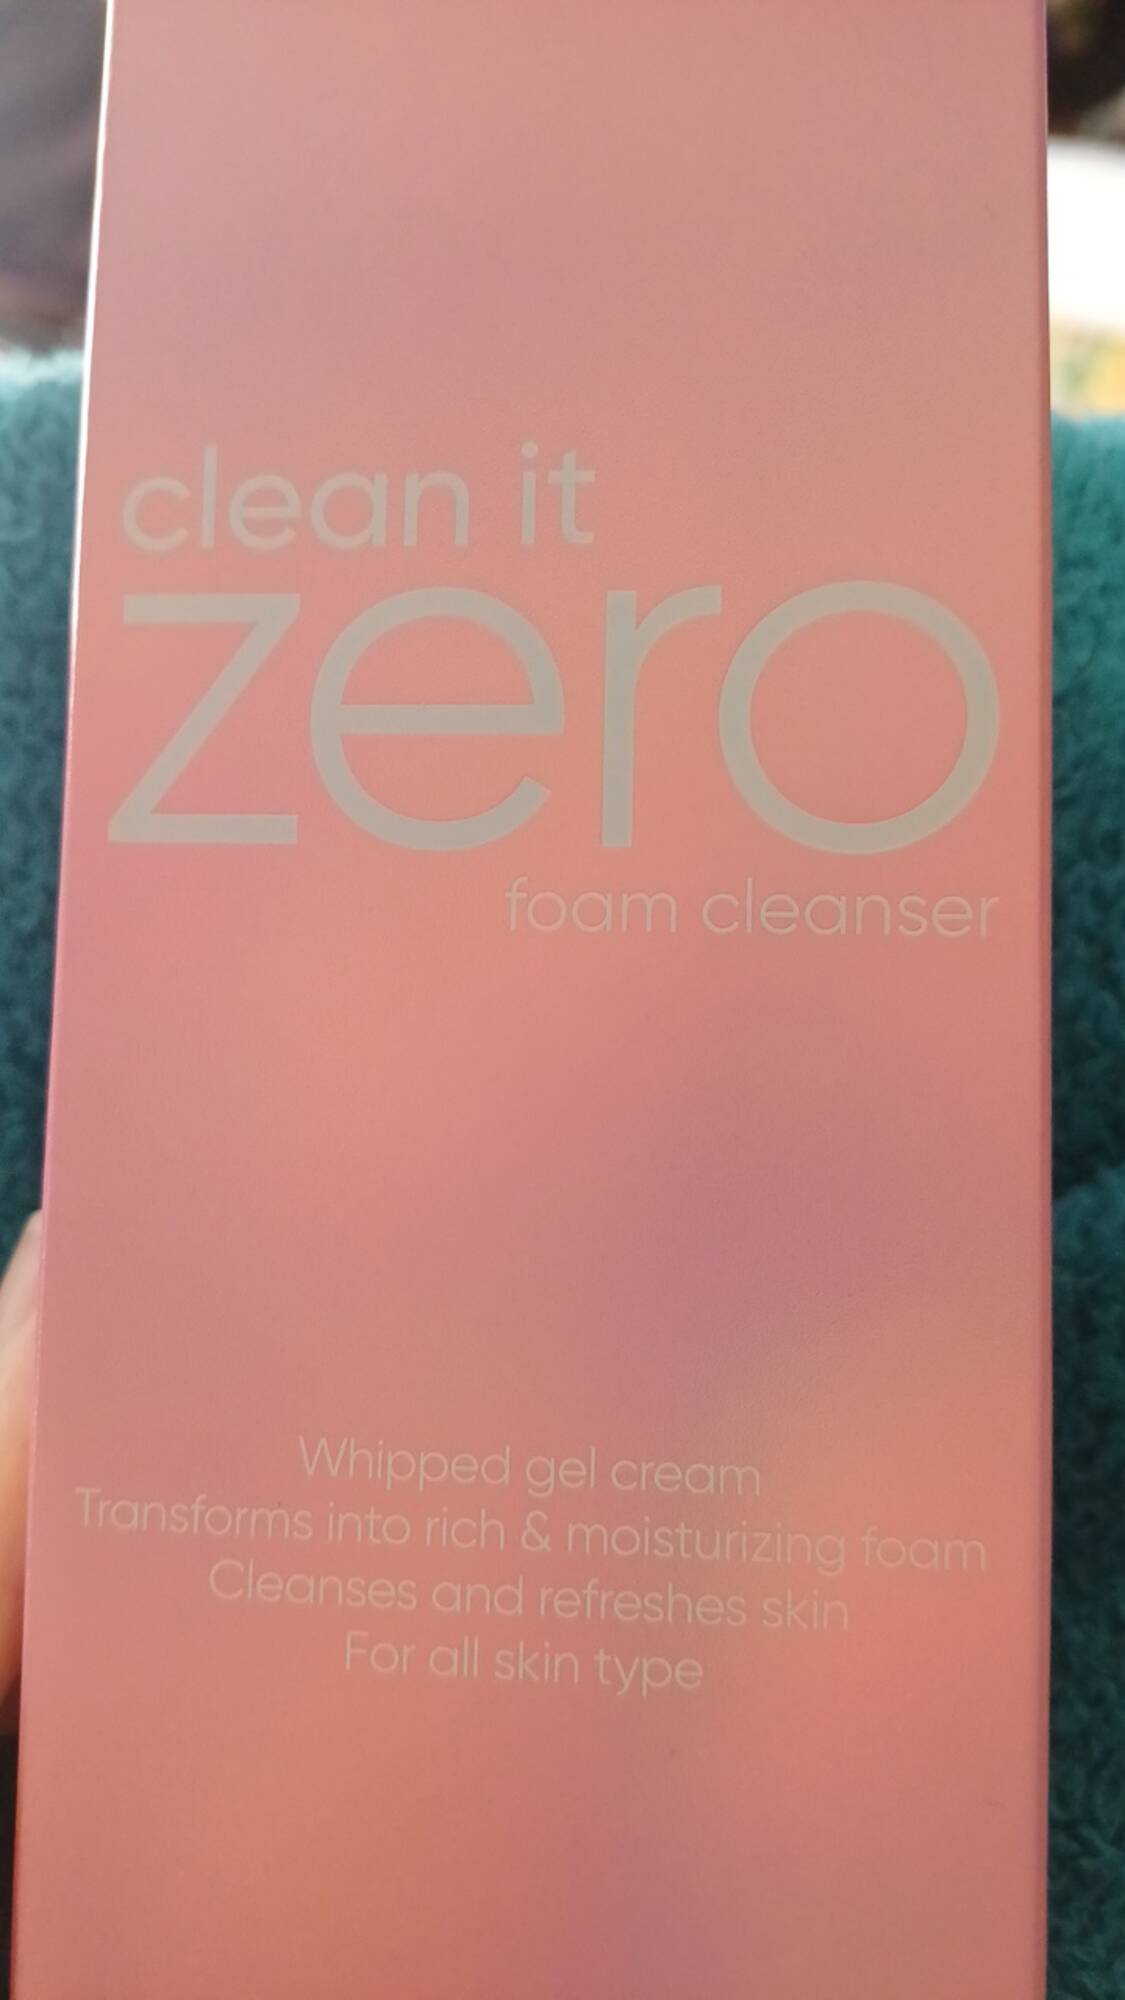 BANILA CO - Clean it zero - Foam cleanser